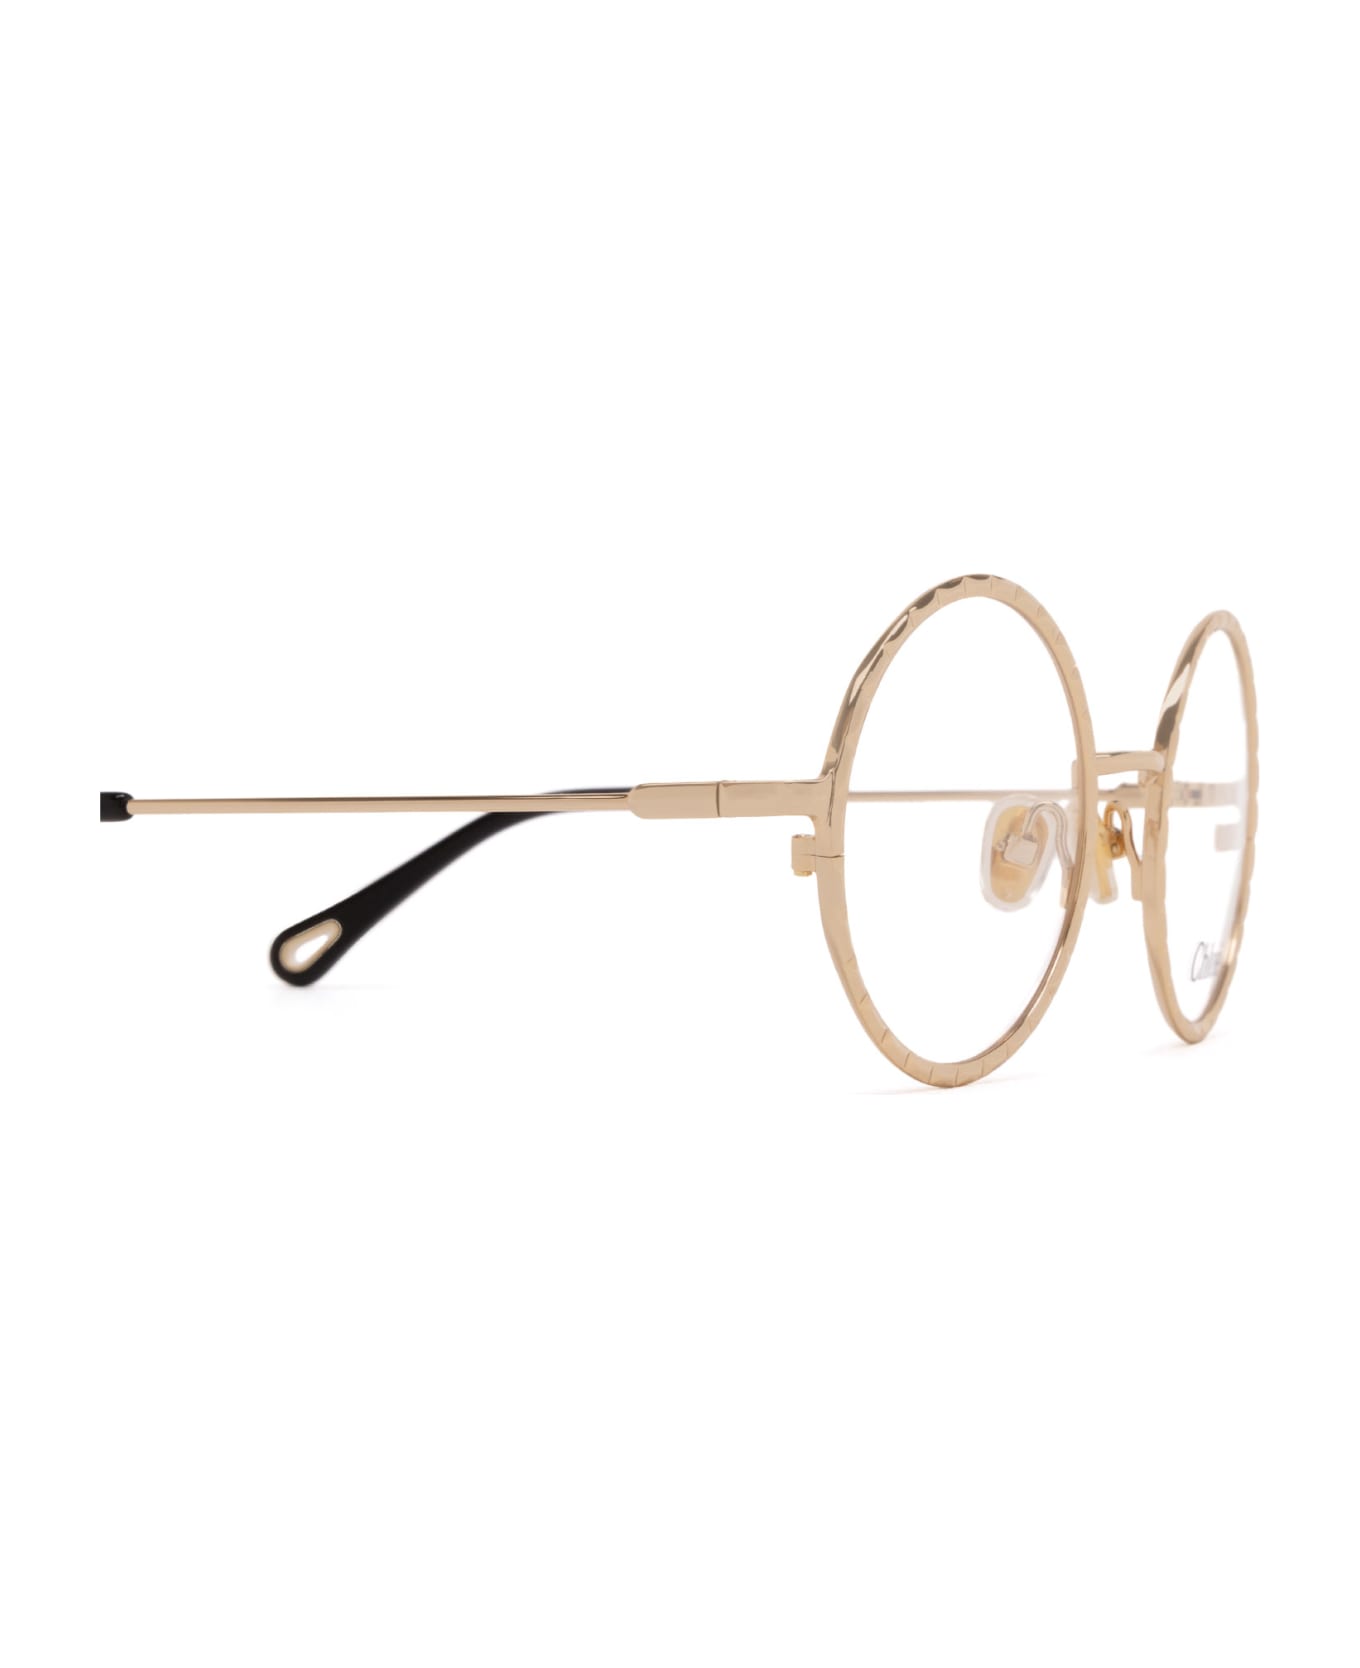 Chloé Eyewear Ch0232o Gold Glasses - Gold